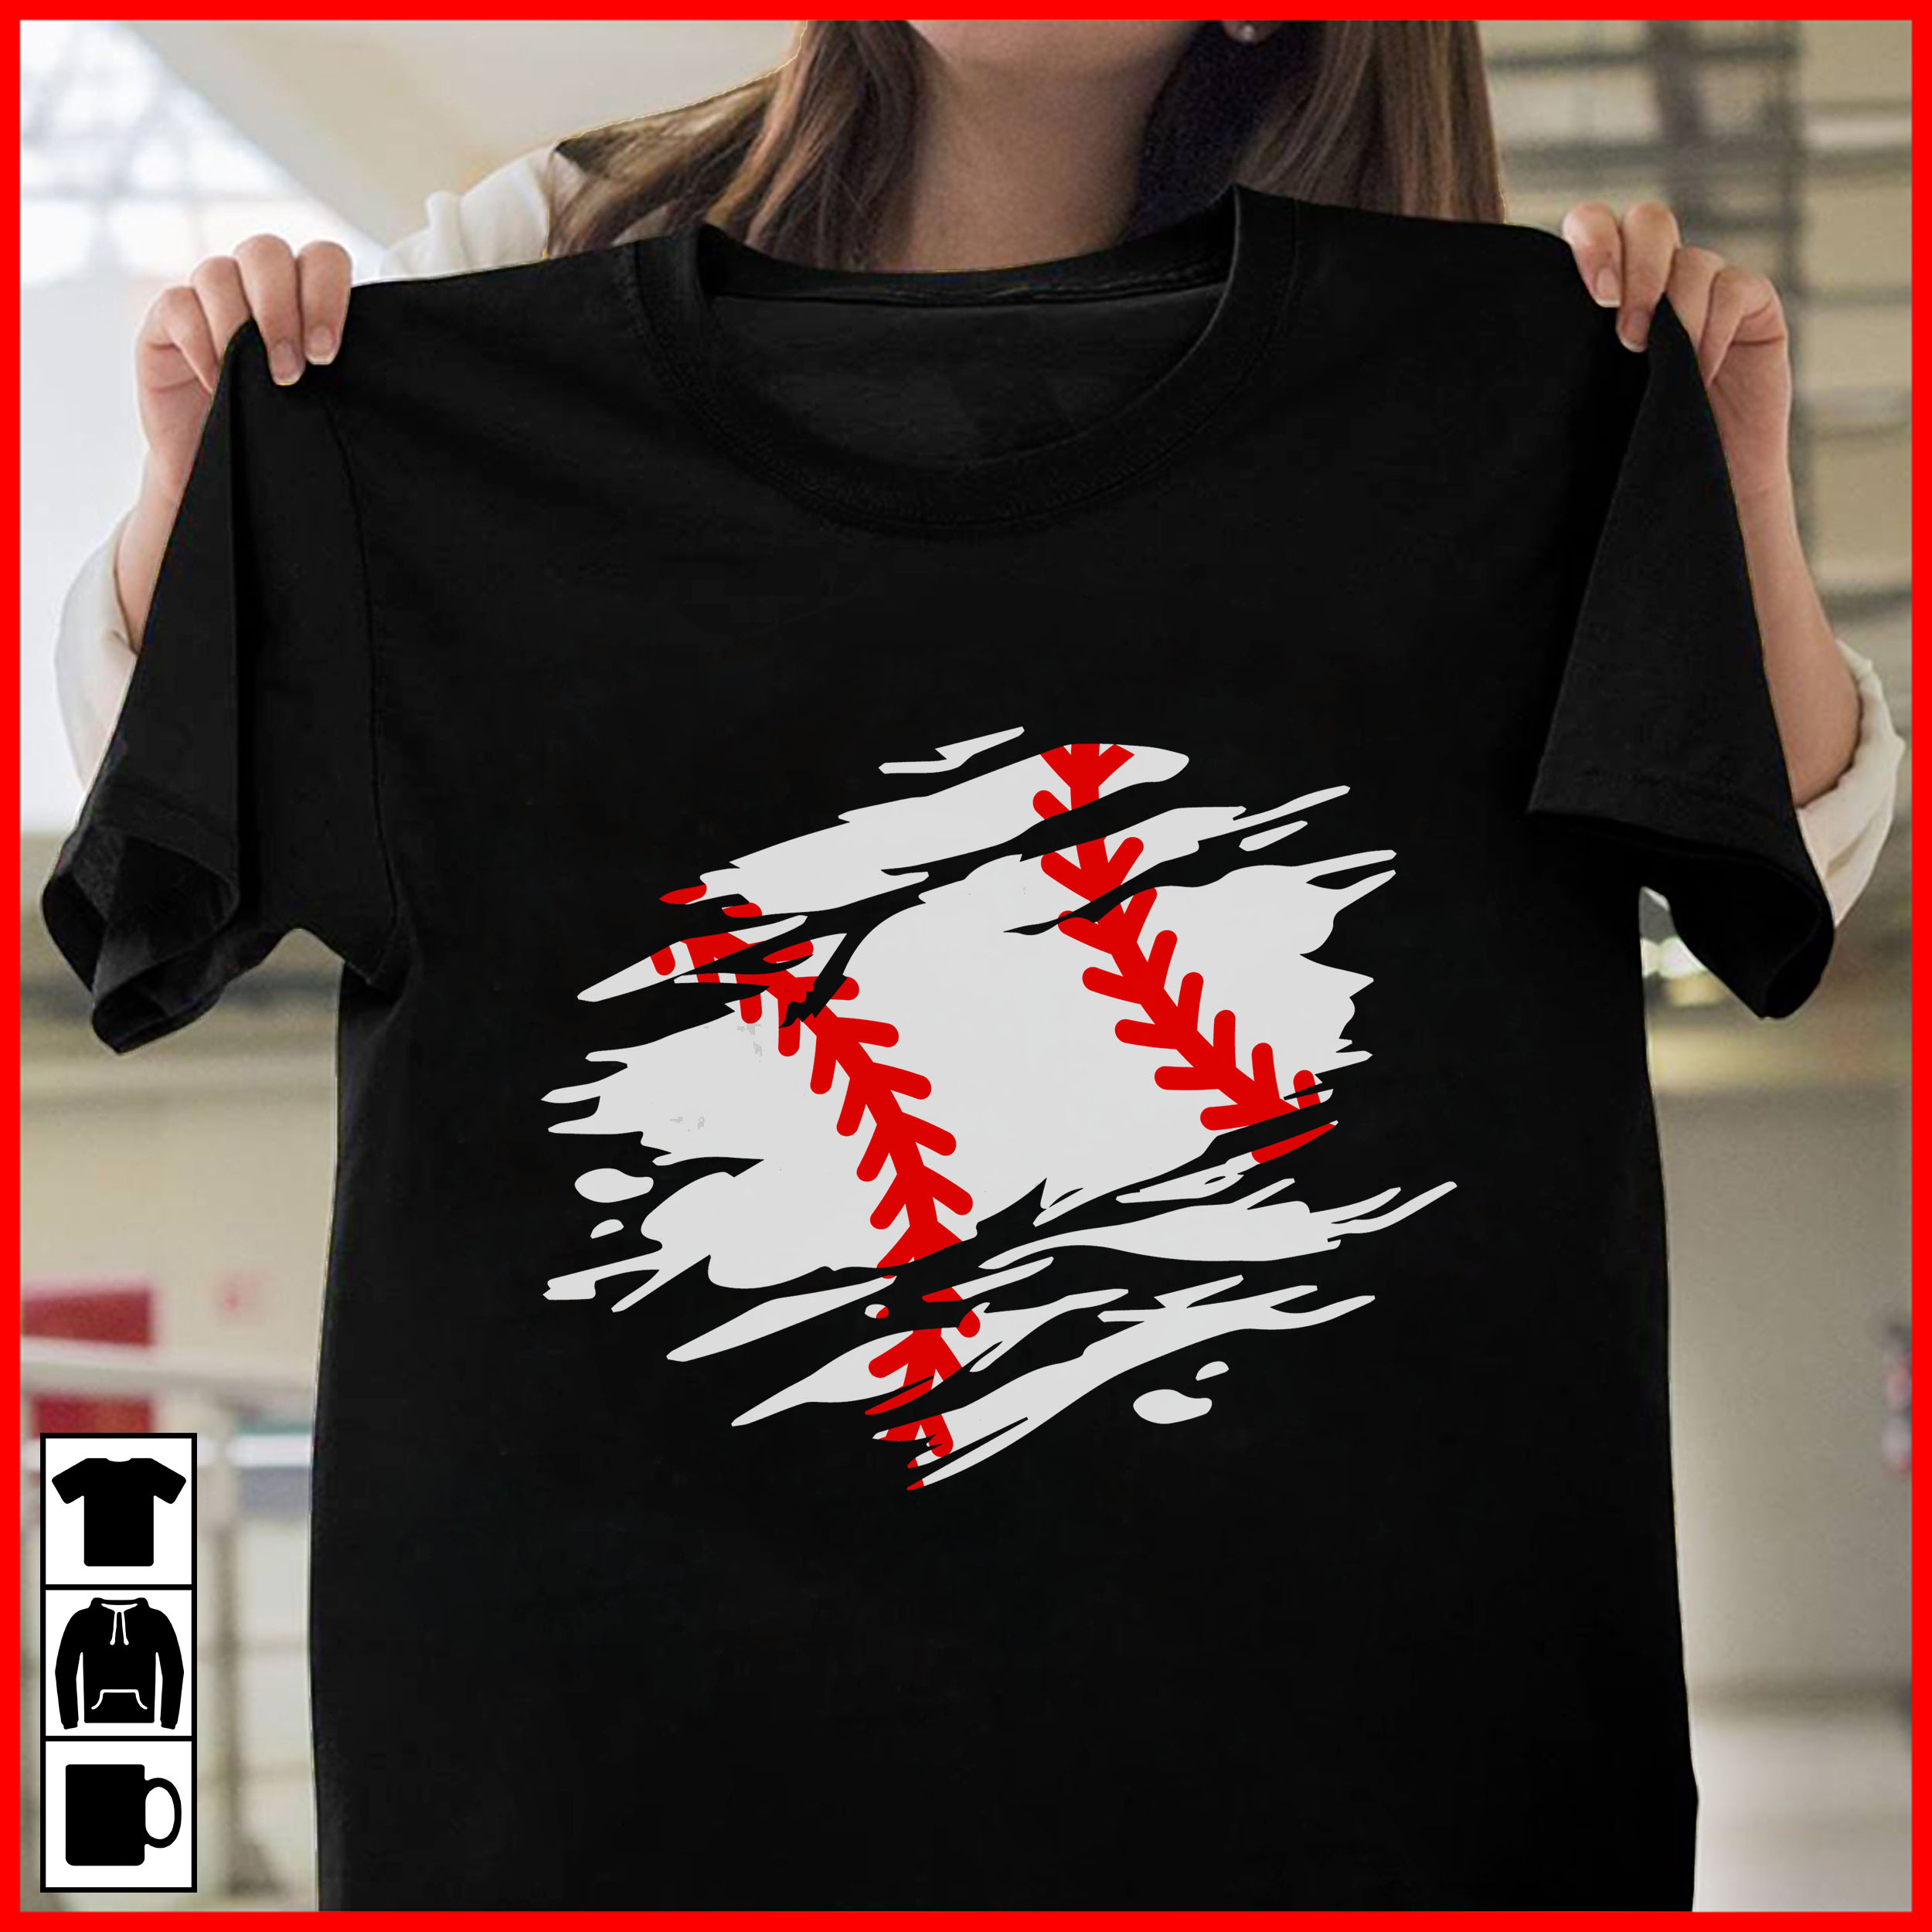 baseball shirt